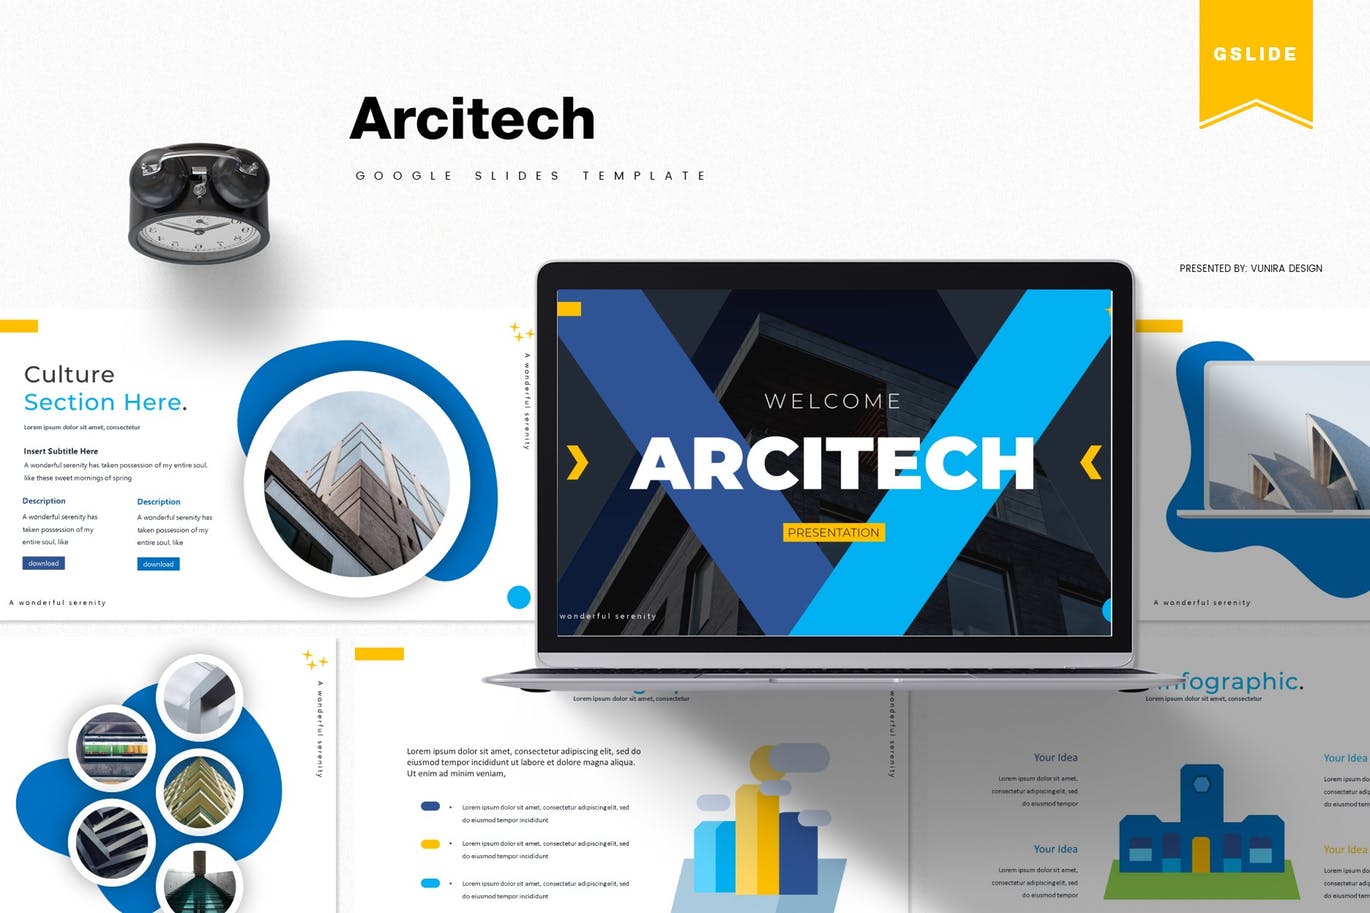 Arcitech - Google Slides Template